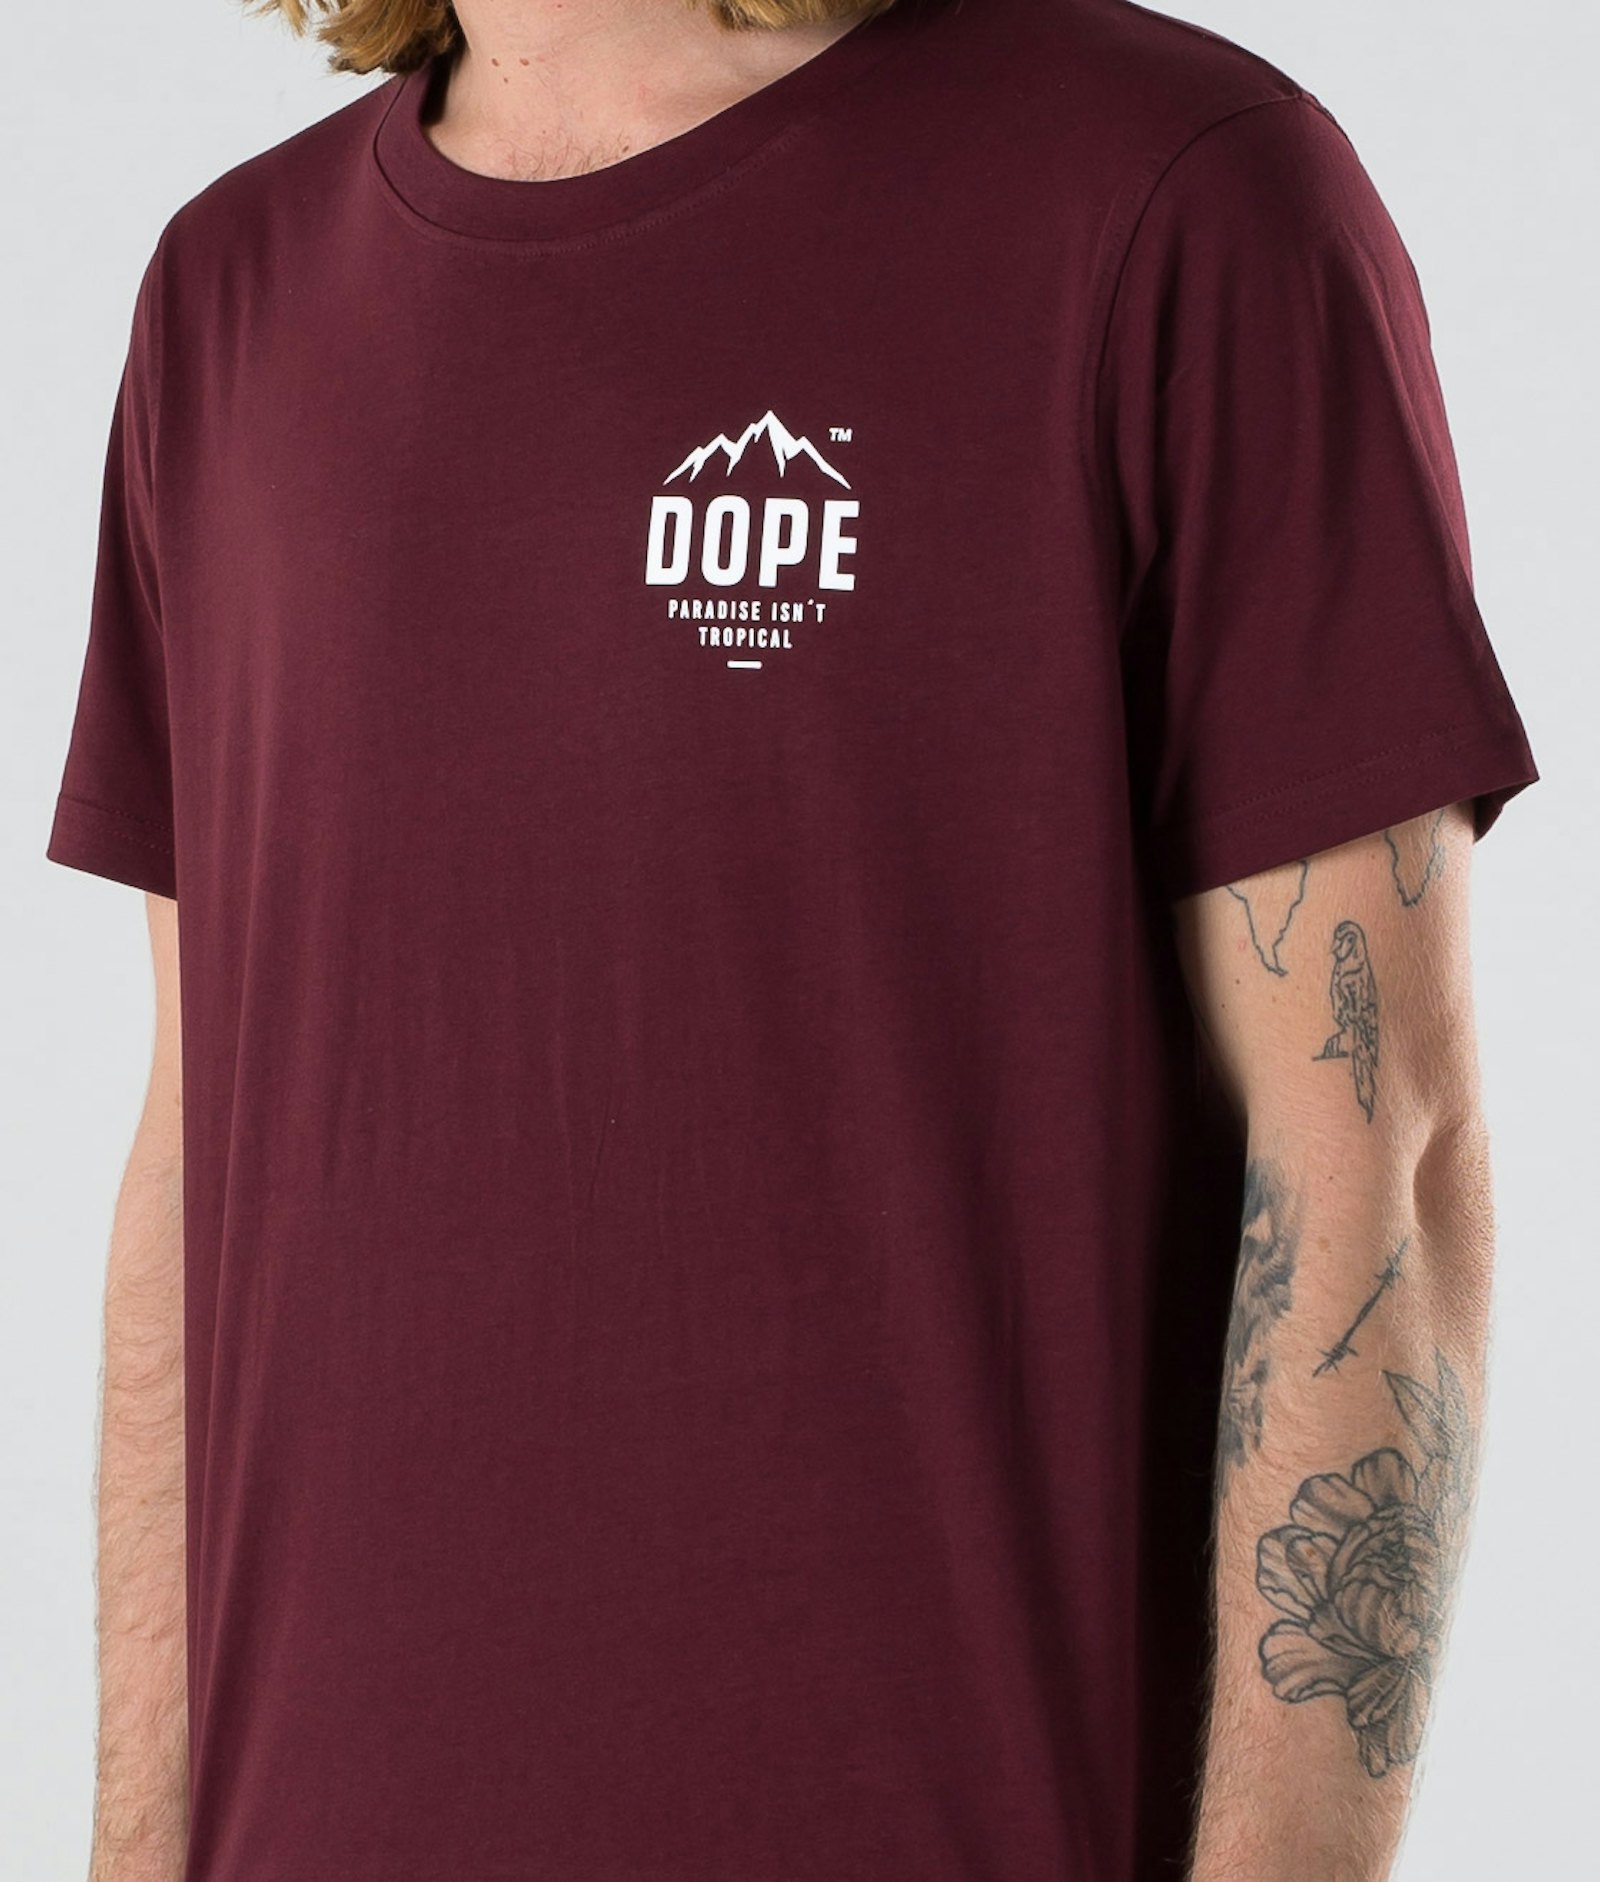 Dope Paradise II T-shirt Homme Burgundy